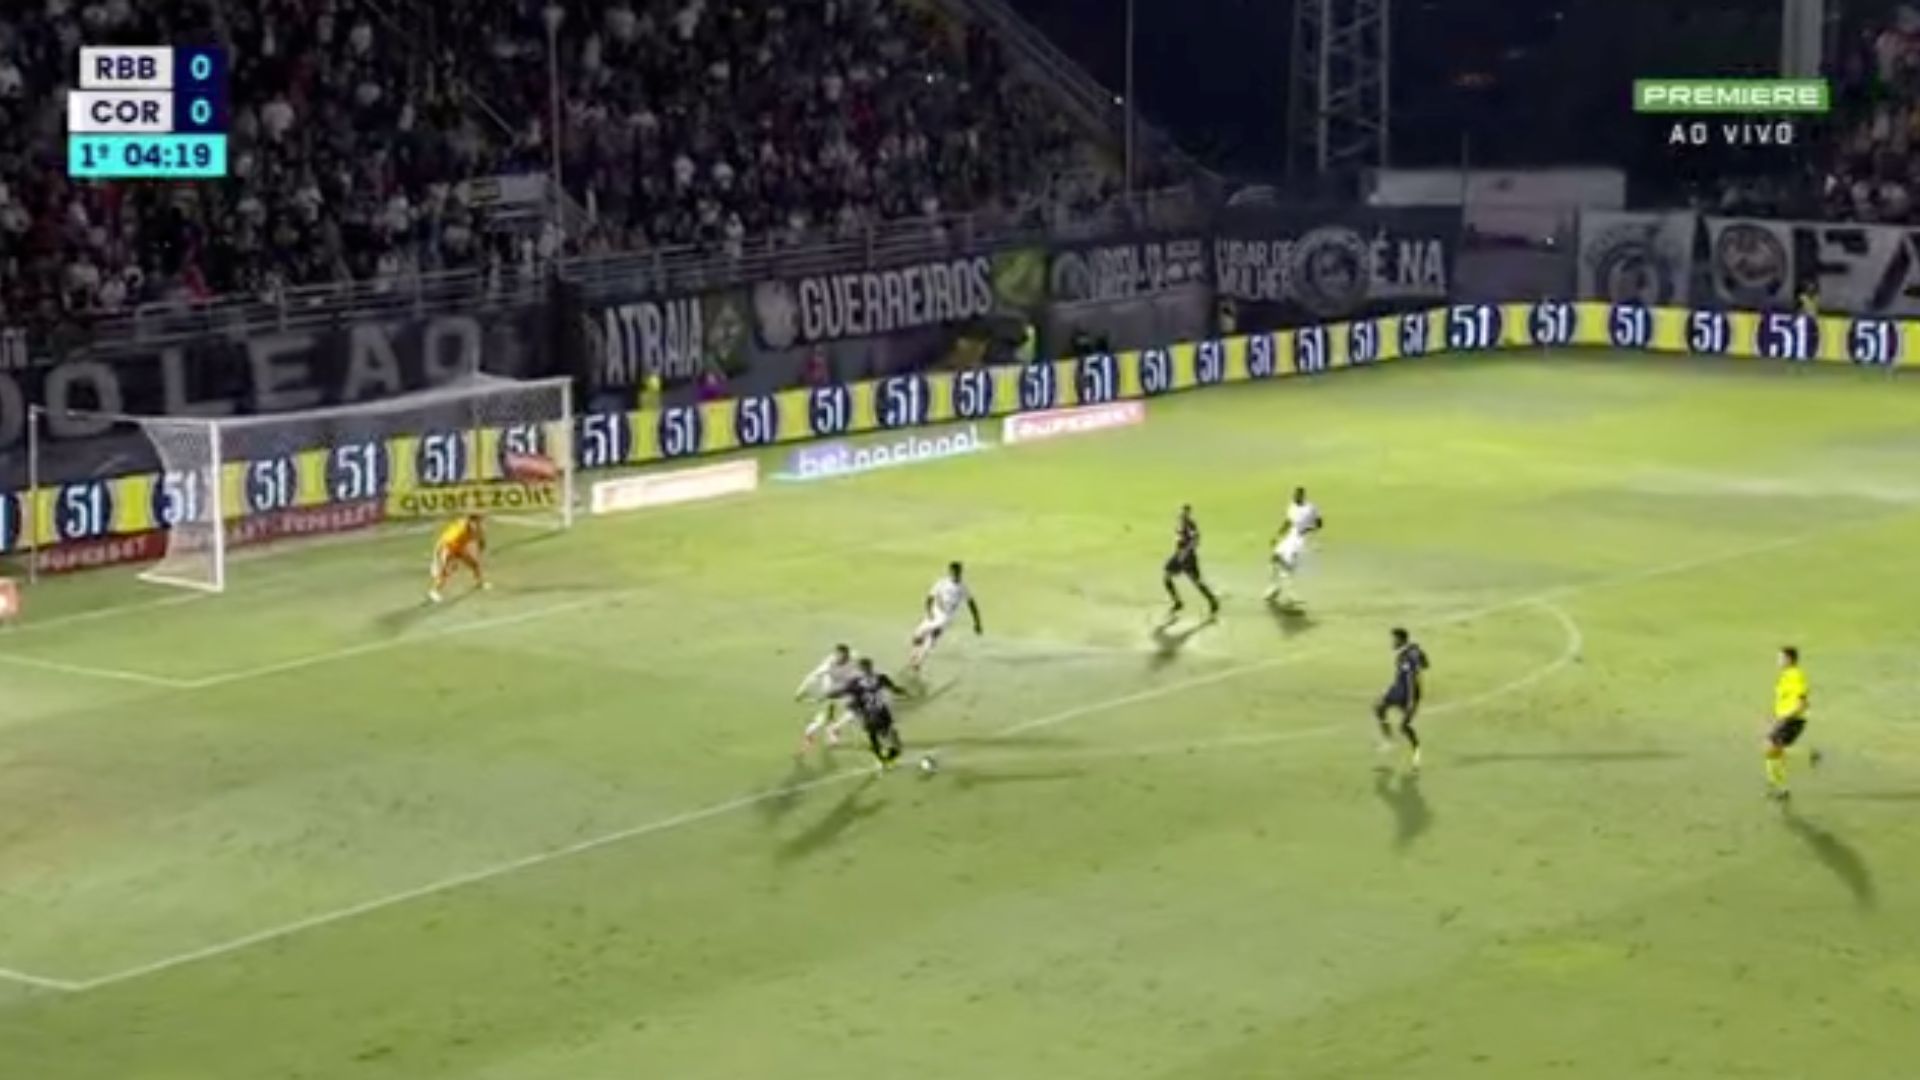 Bragantino's goal moment